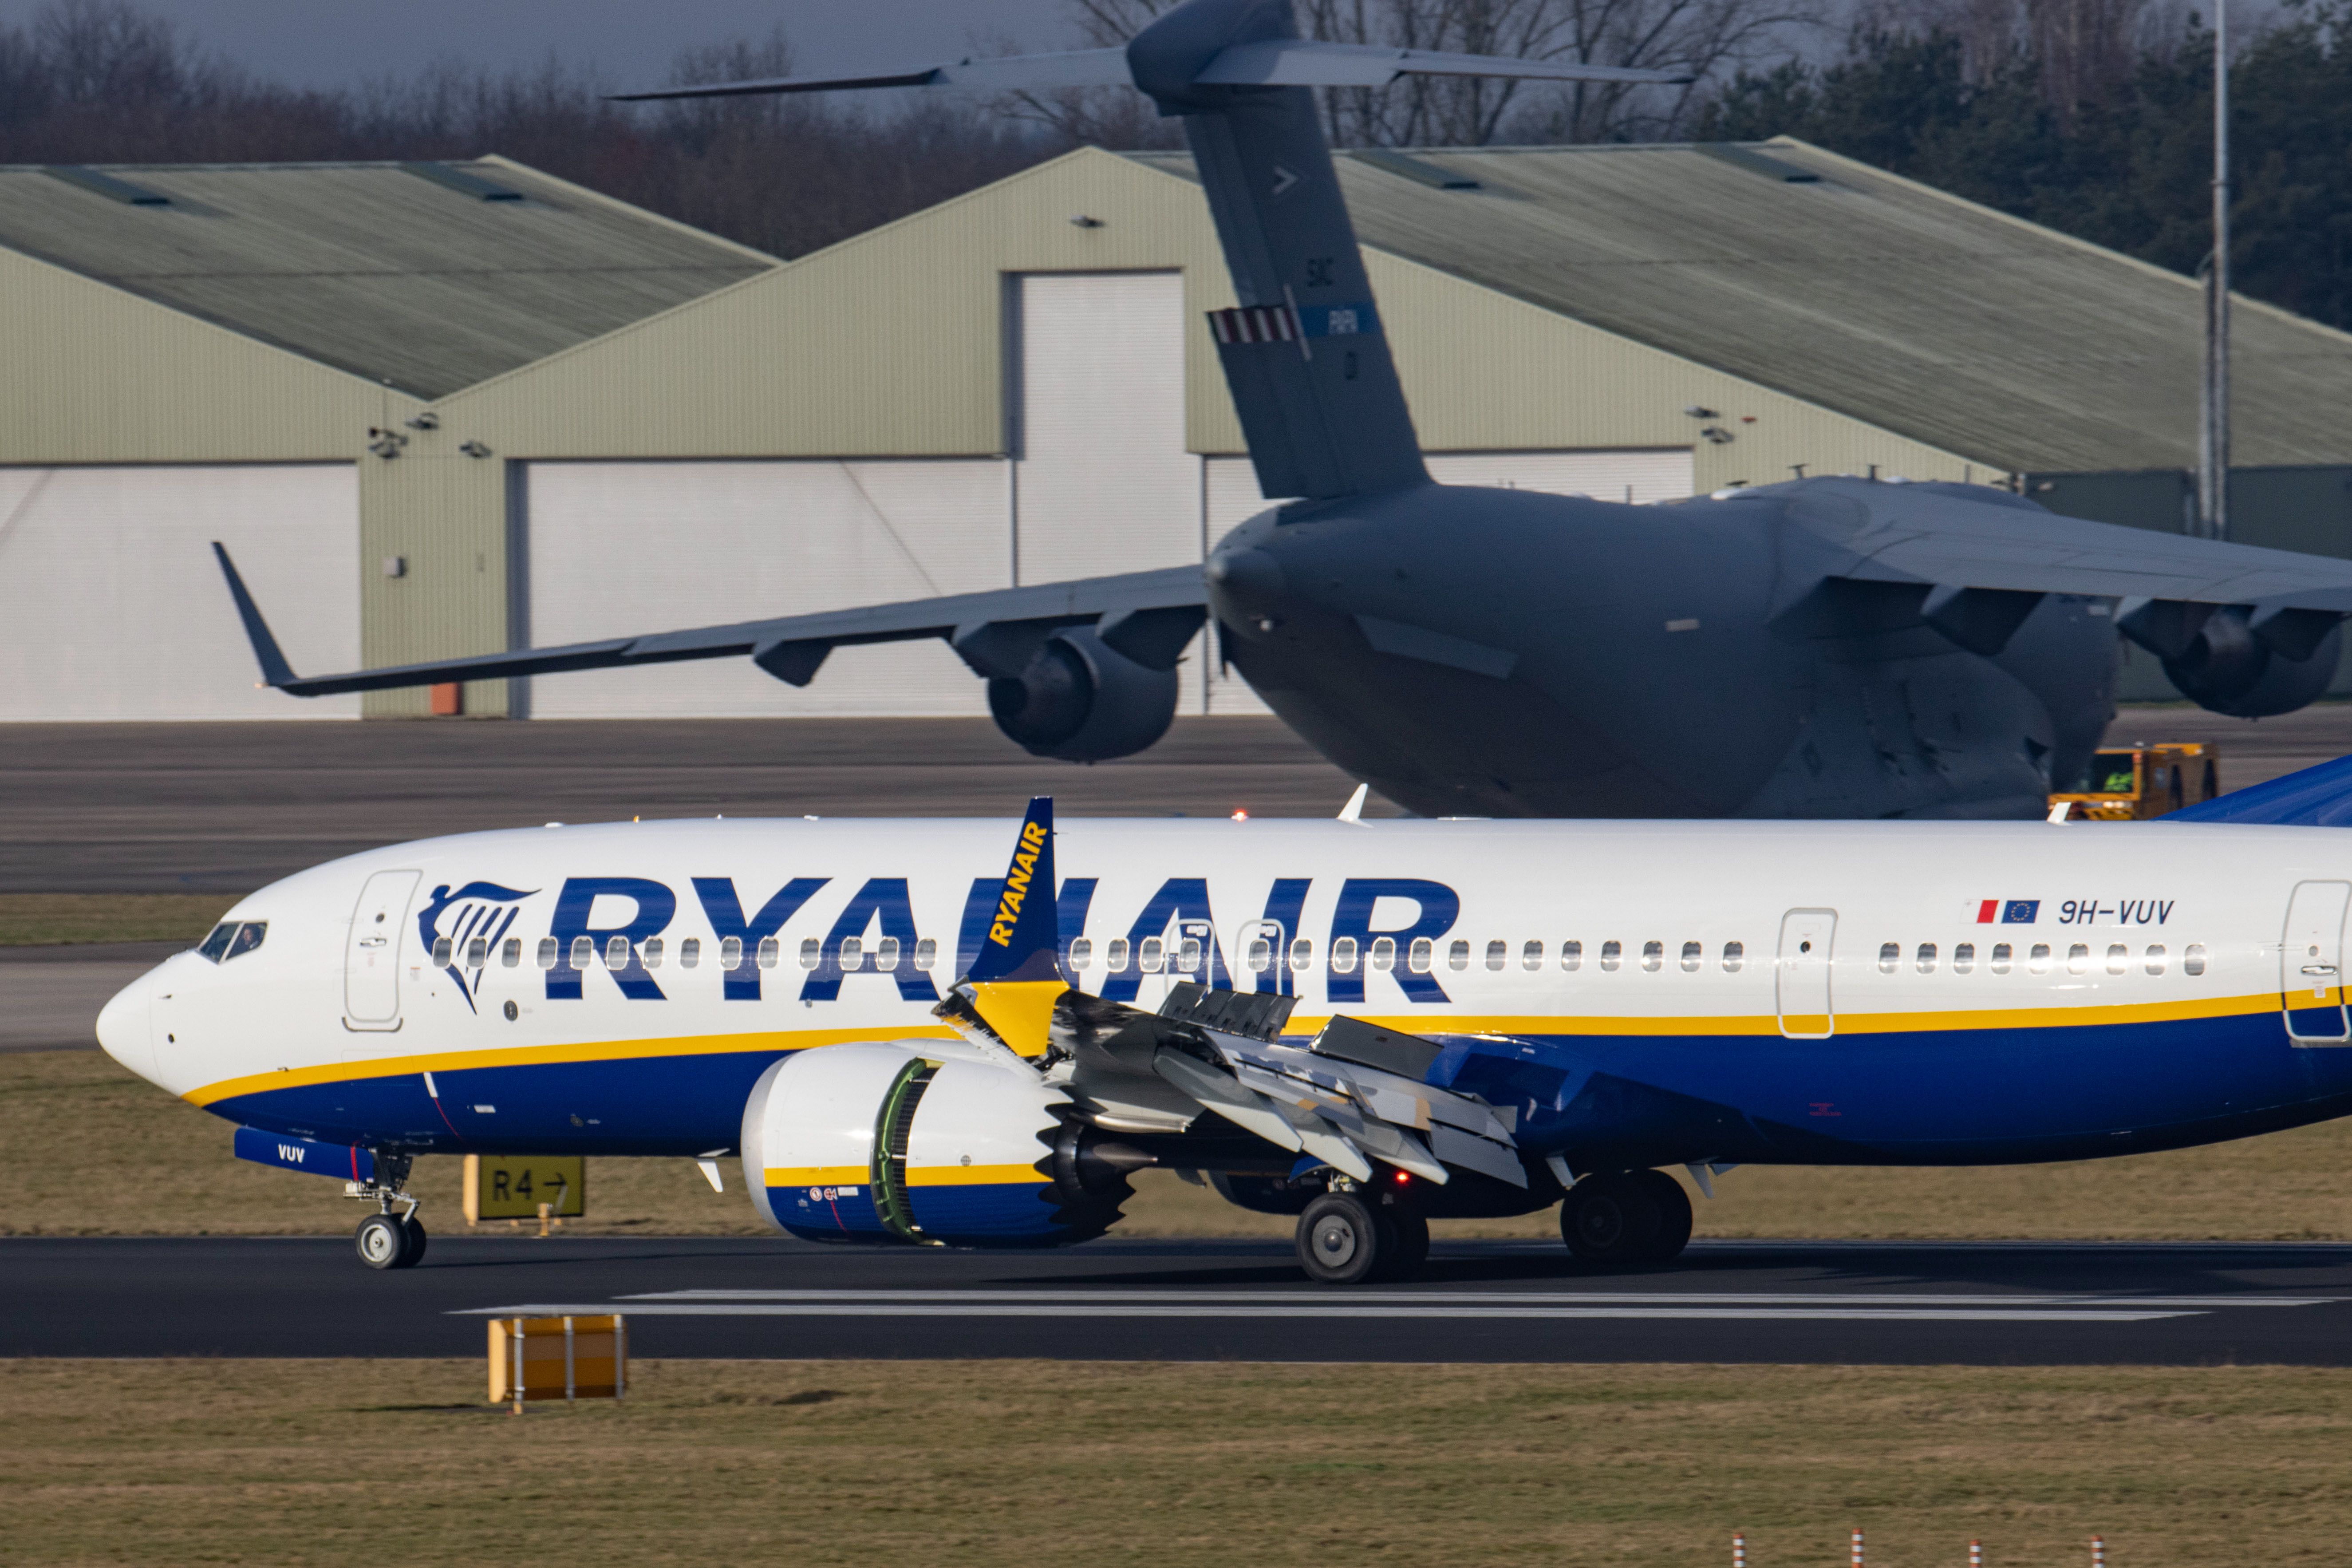 Ryanair 737 MAX 8-200 in sunshine on runway